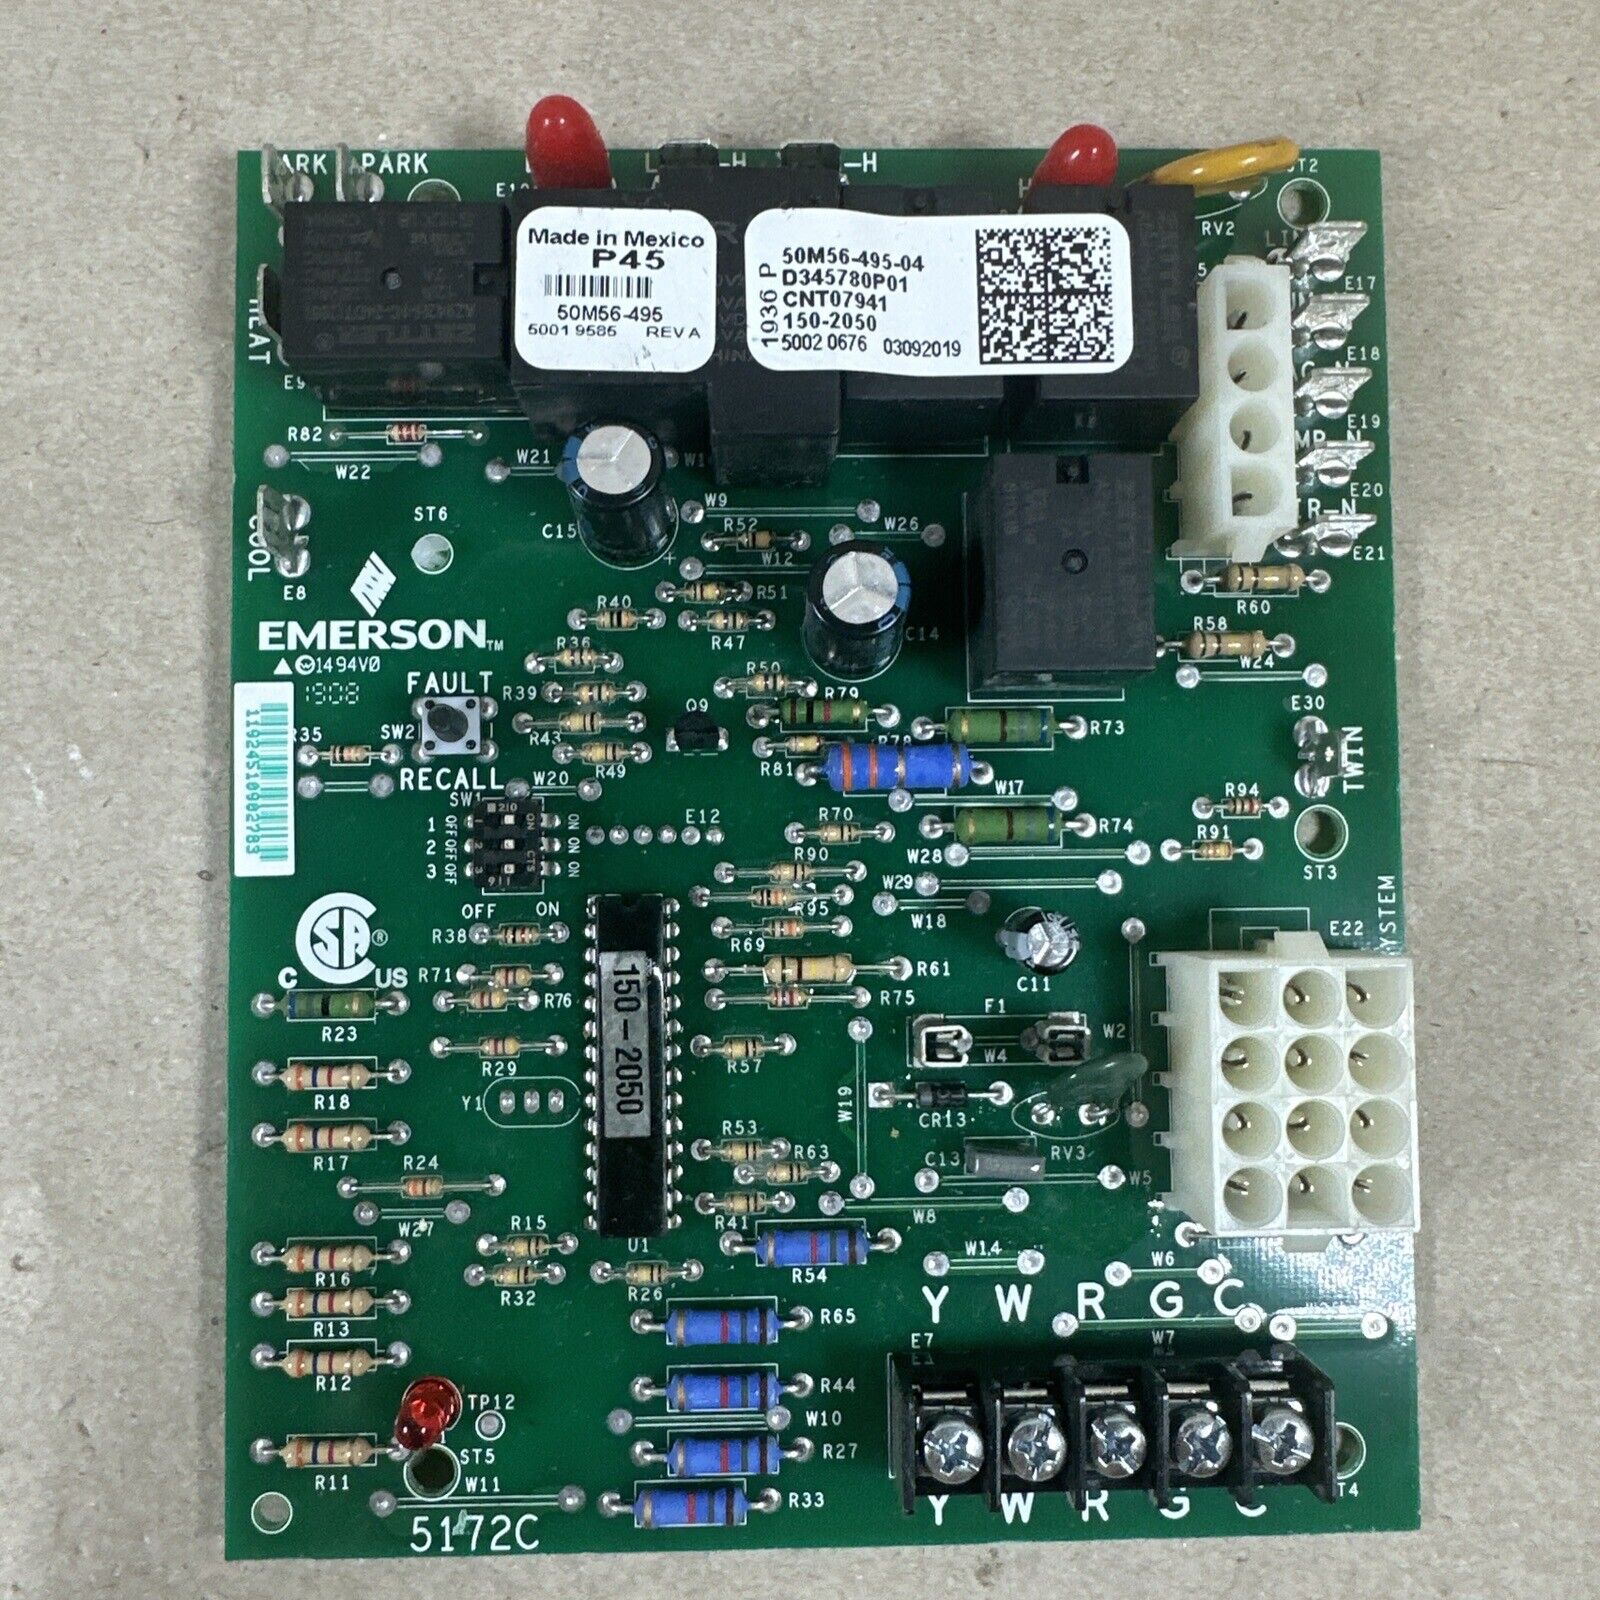 TRANE 50M56-495-04 EMERSON  Furnace Control Circuit Board D345780P01. (D14)